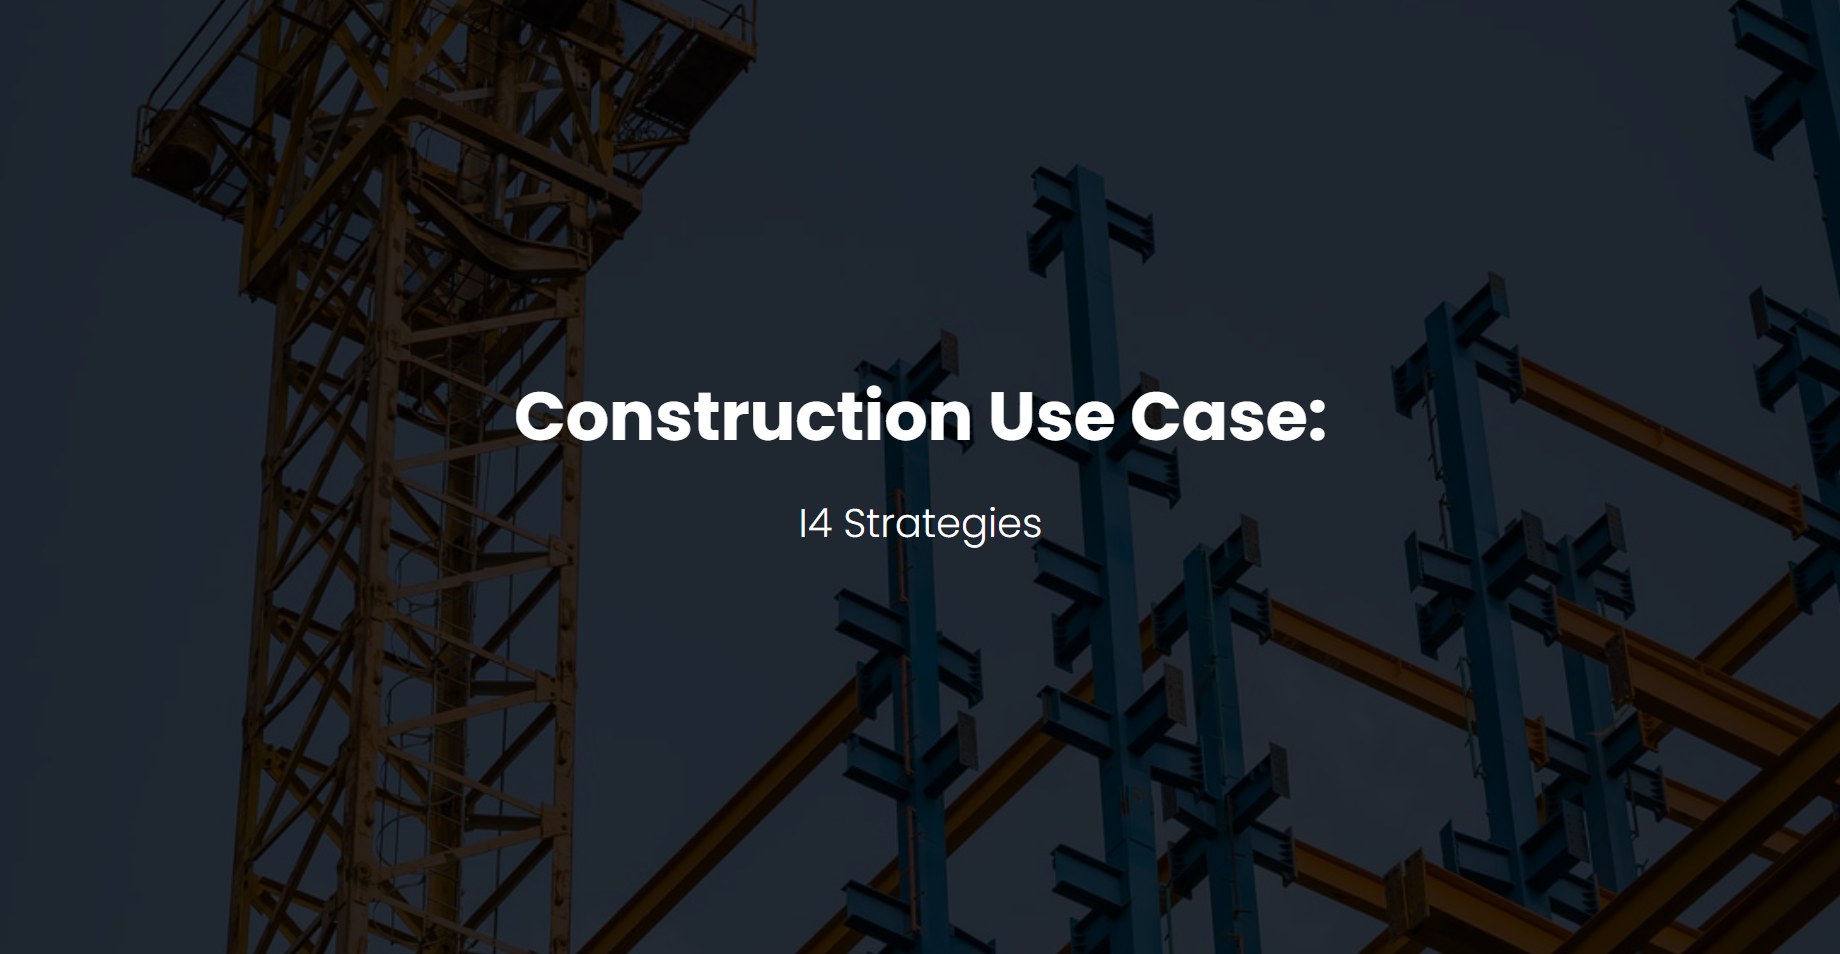 Construction Use Case: I4 Strategies